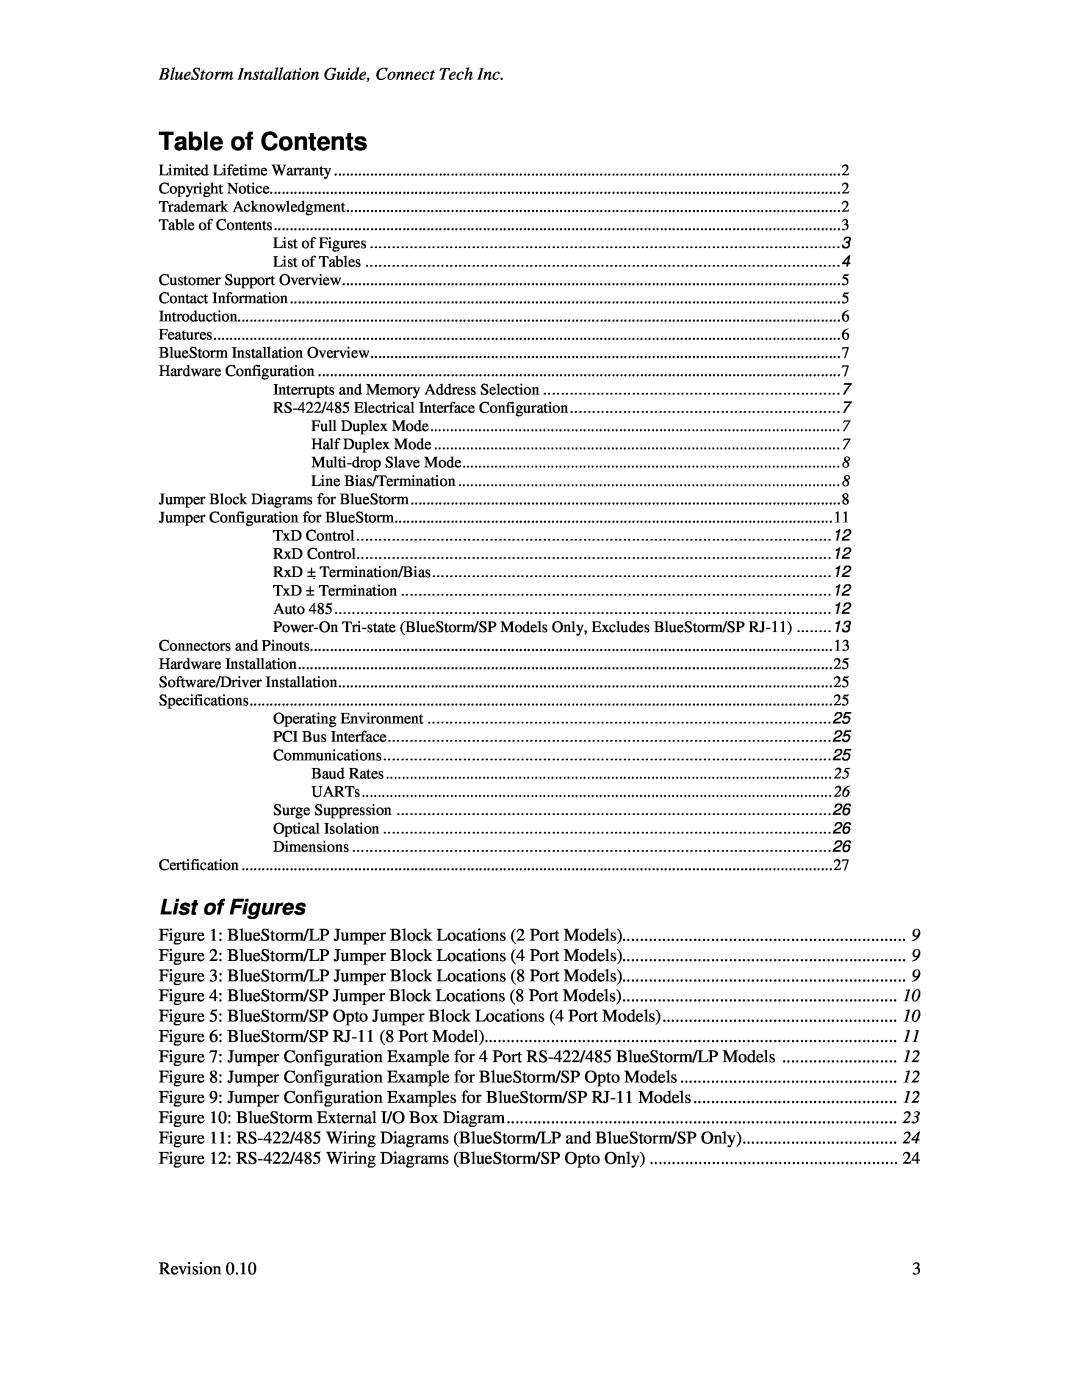 Connect Tech BlueStorm Universal PCI Table of Contents, List of Figures, BlueStorm Installation Guide, Connect Tech Inc 